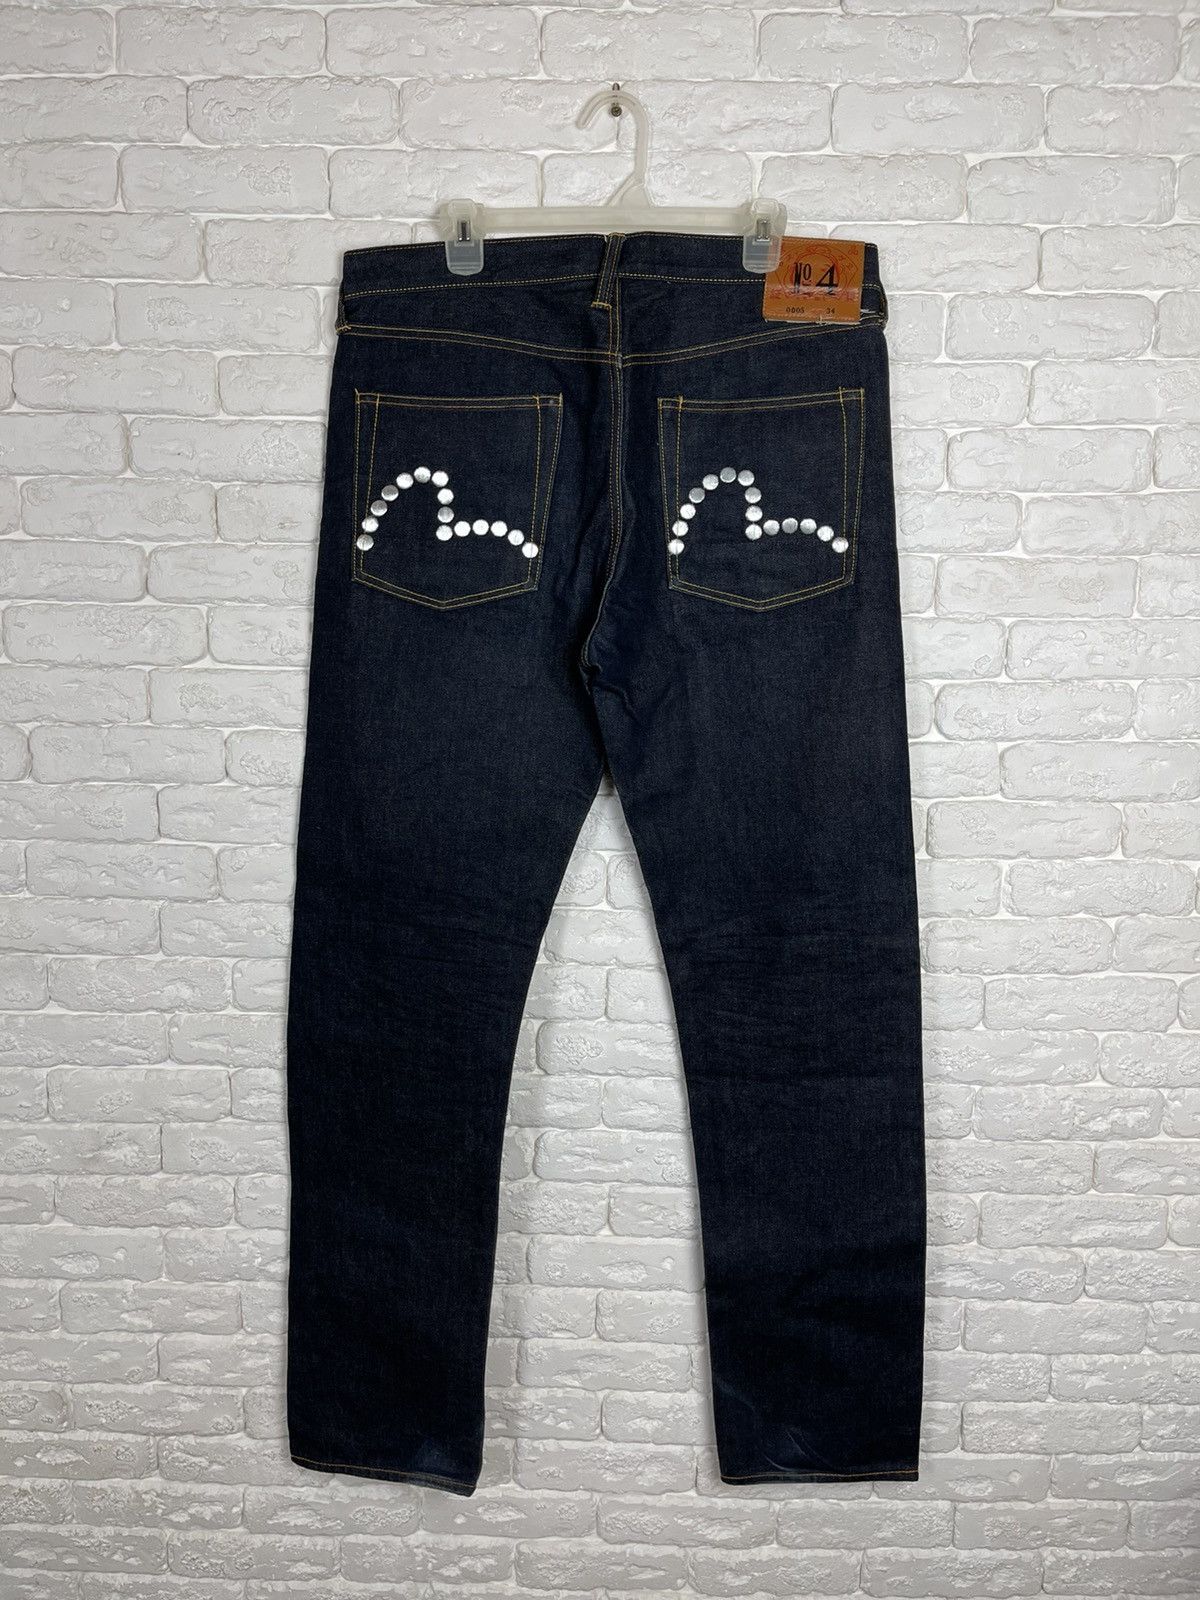 Evisu Evisu denim jeans pants big logo selvedge | Grailed